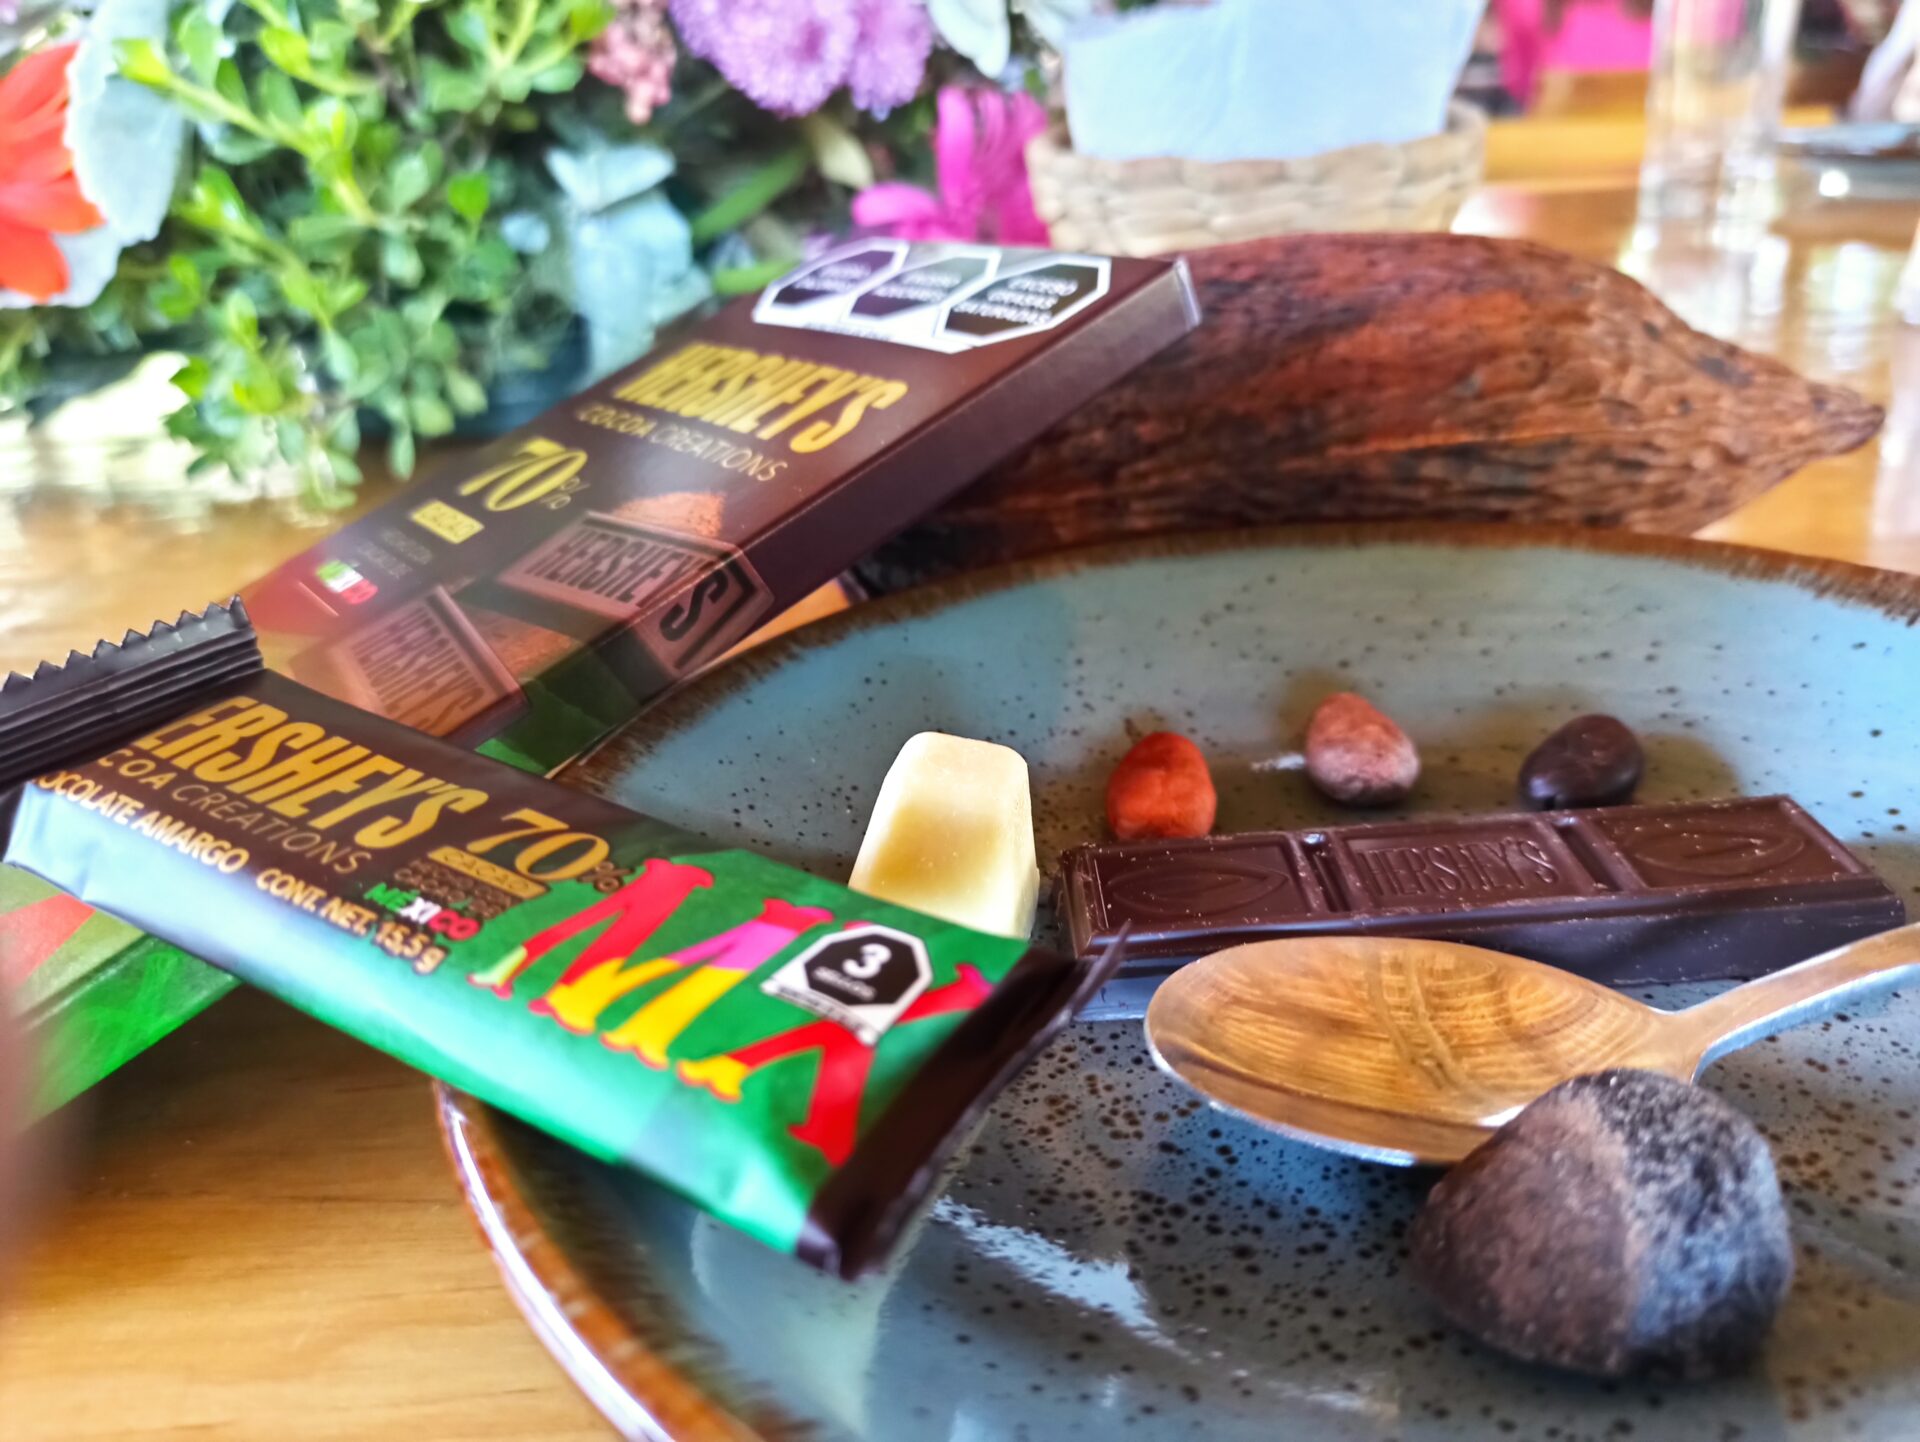 Hershey’s crea con agricultores chiapanecos un chocolate con cacao mexicano